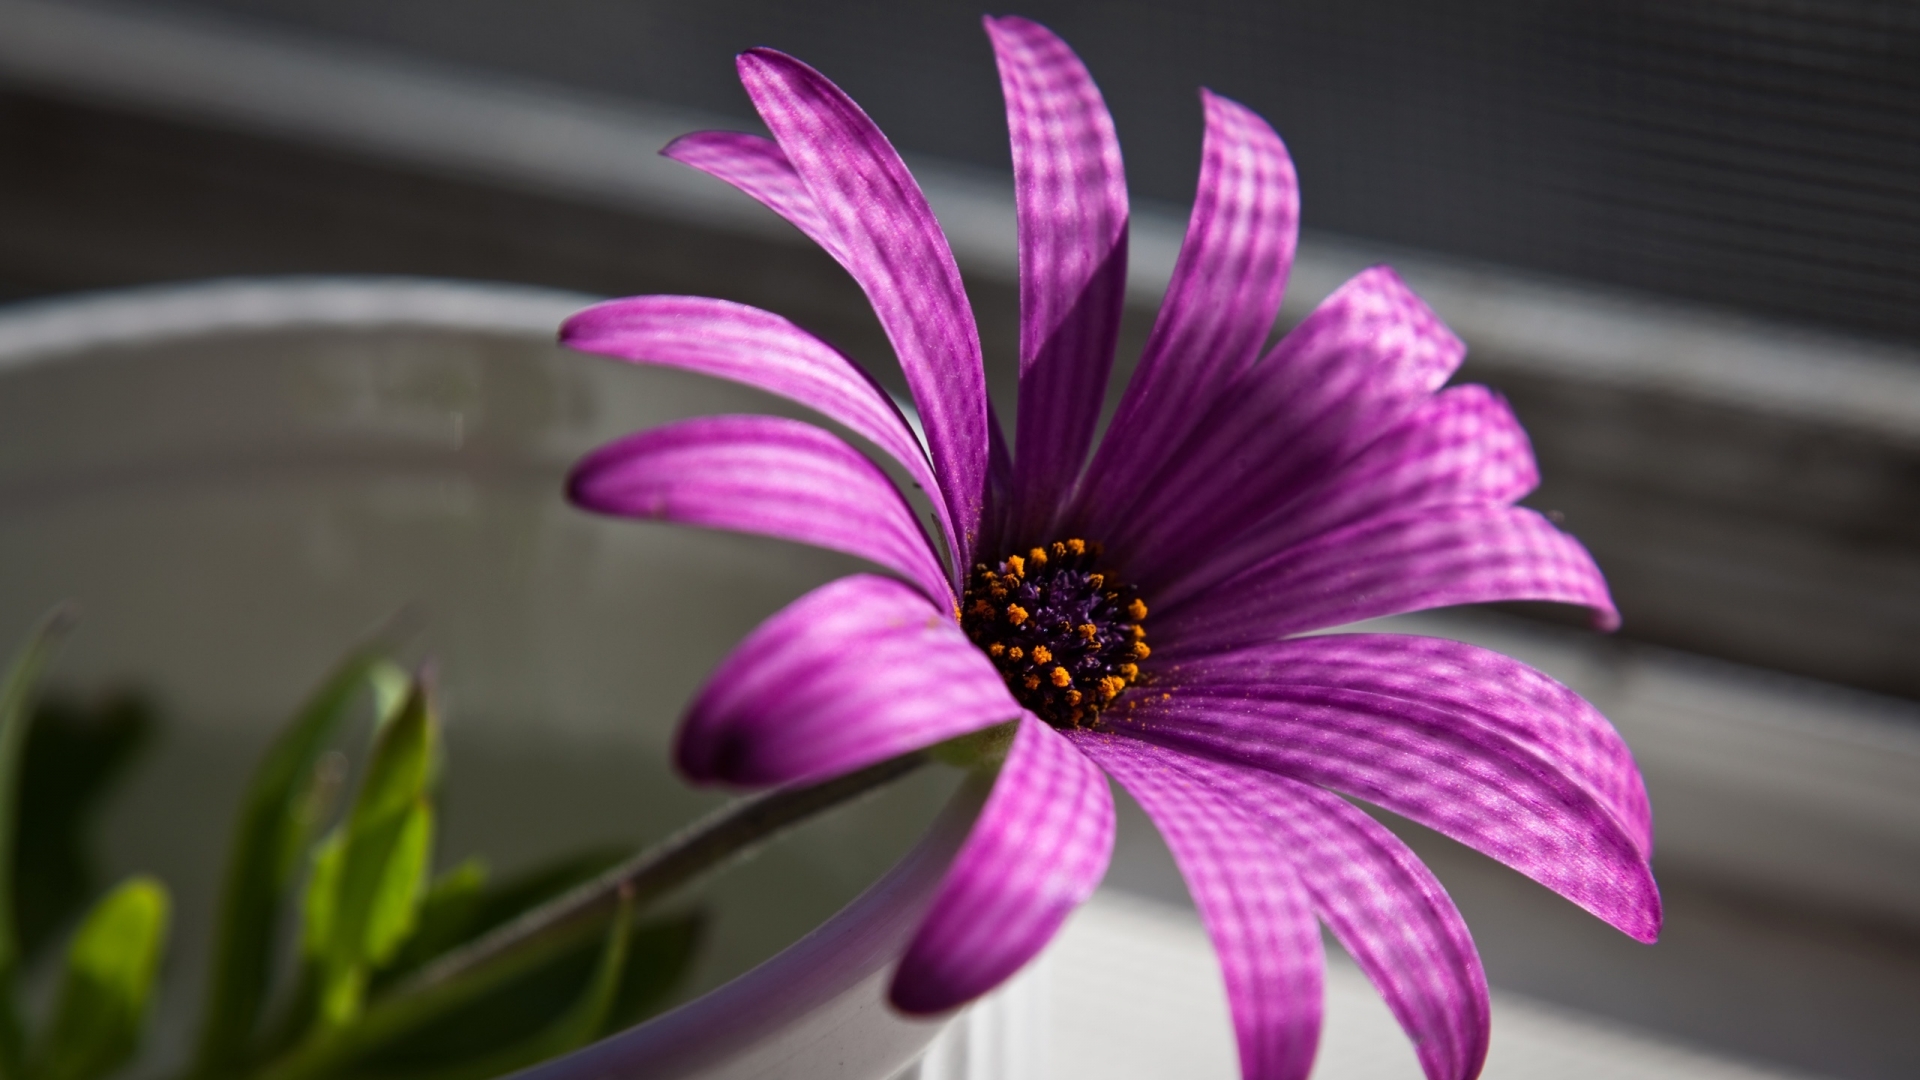 Superb Purple Flower for 1920 x 1080 HDTV 1080p resolution